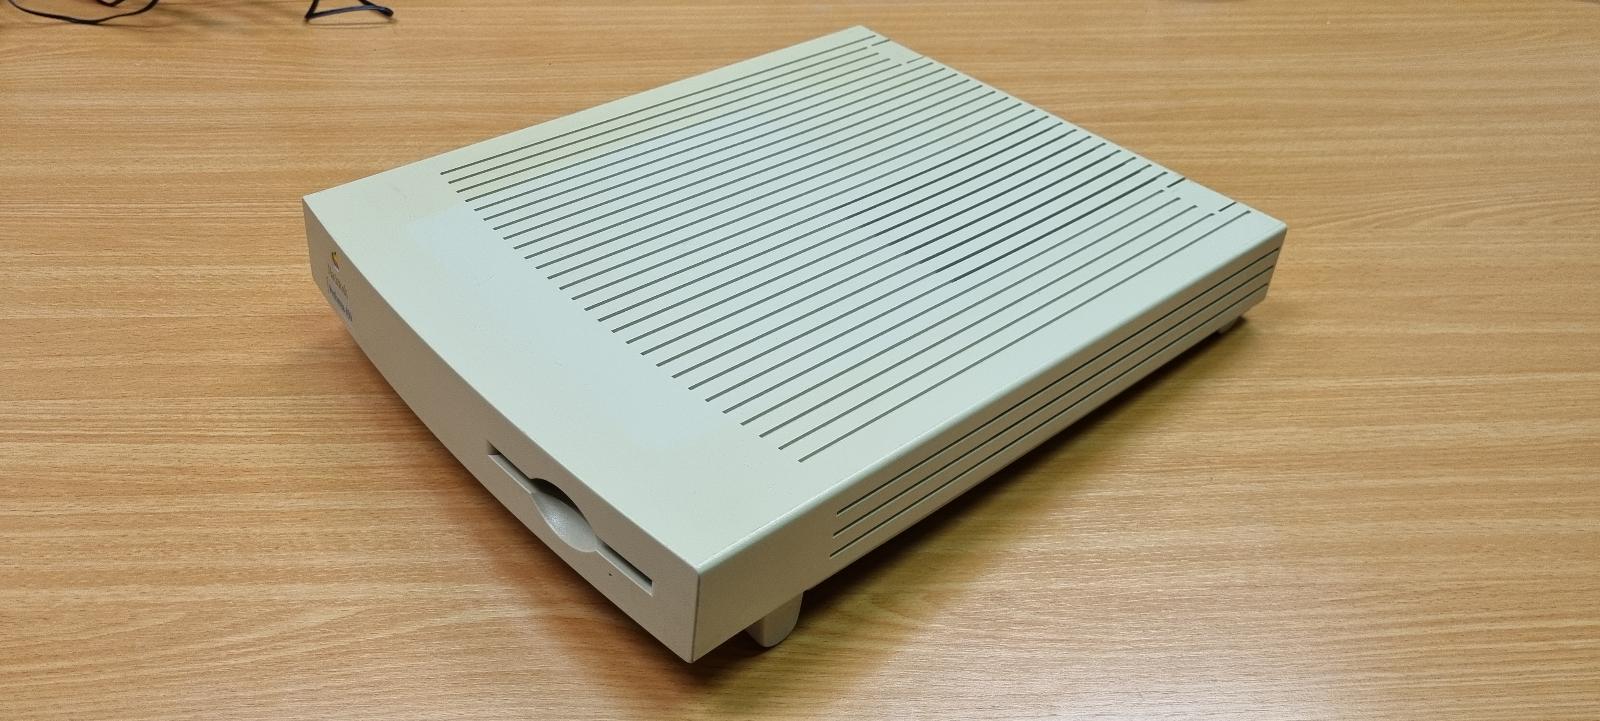 Apple Macintosh Performa 450 Model M1254 - Počítače a hry